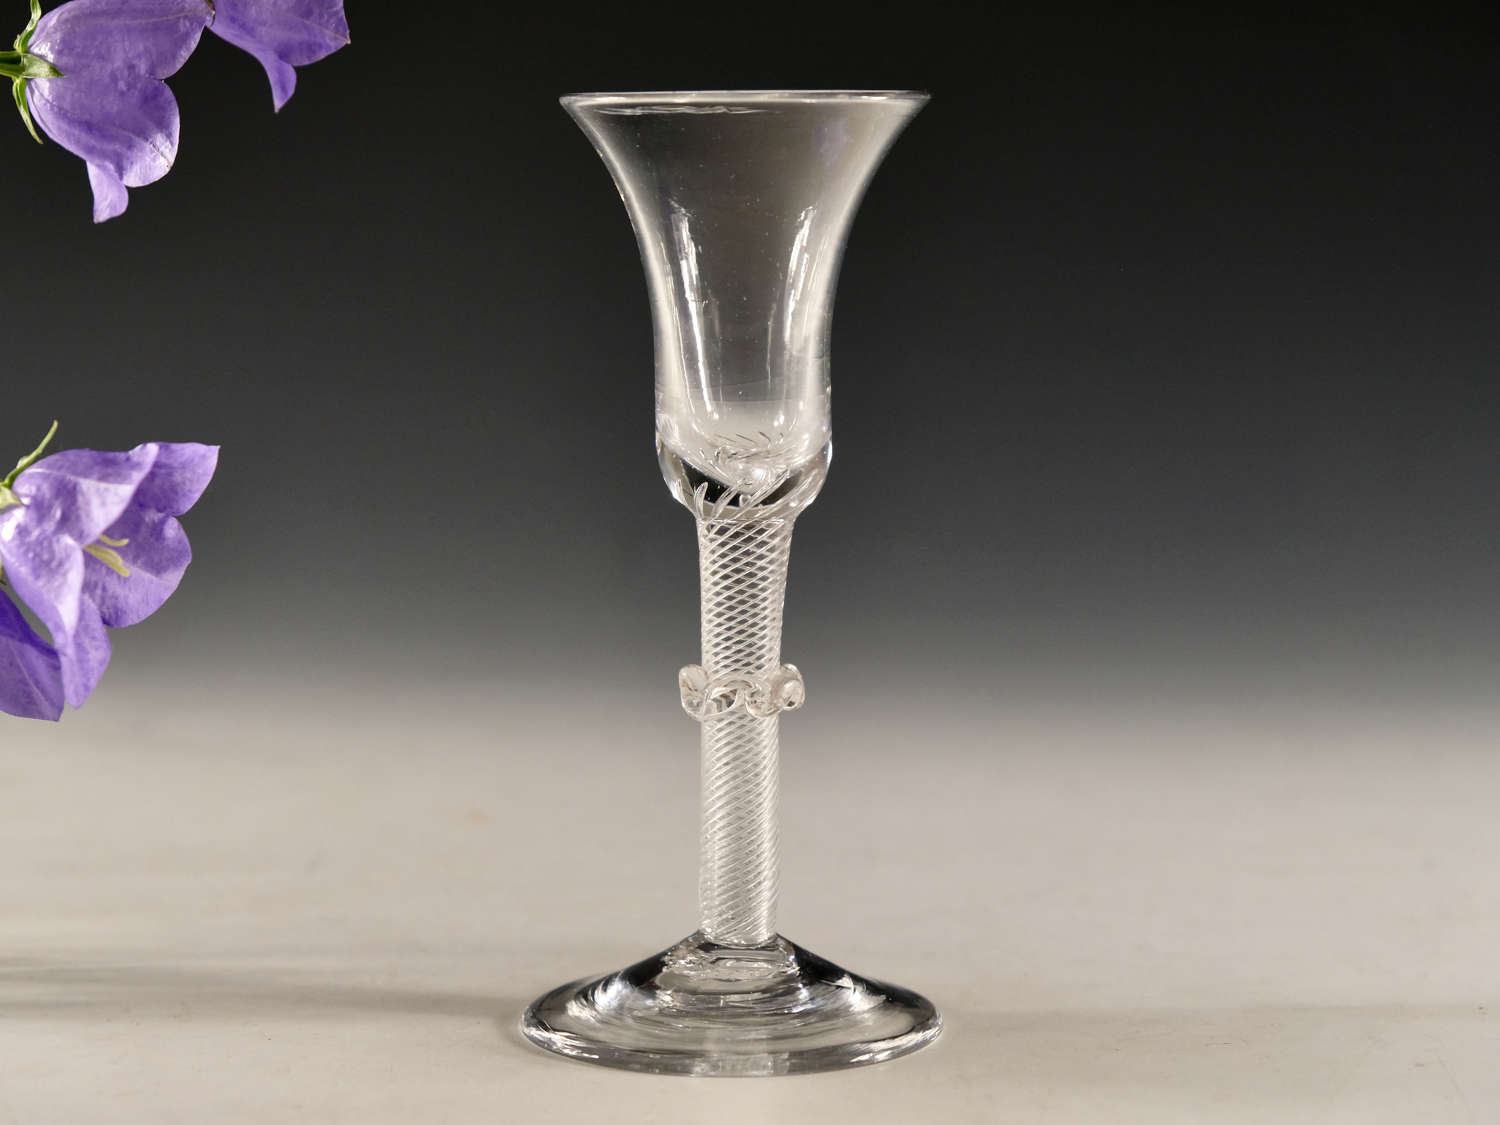 Antique glass - Multi spiral air twist wine glass English c1755